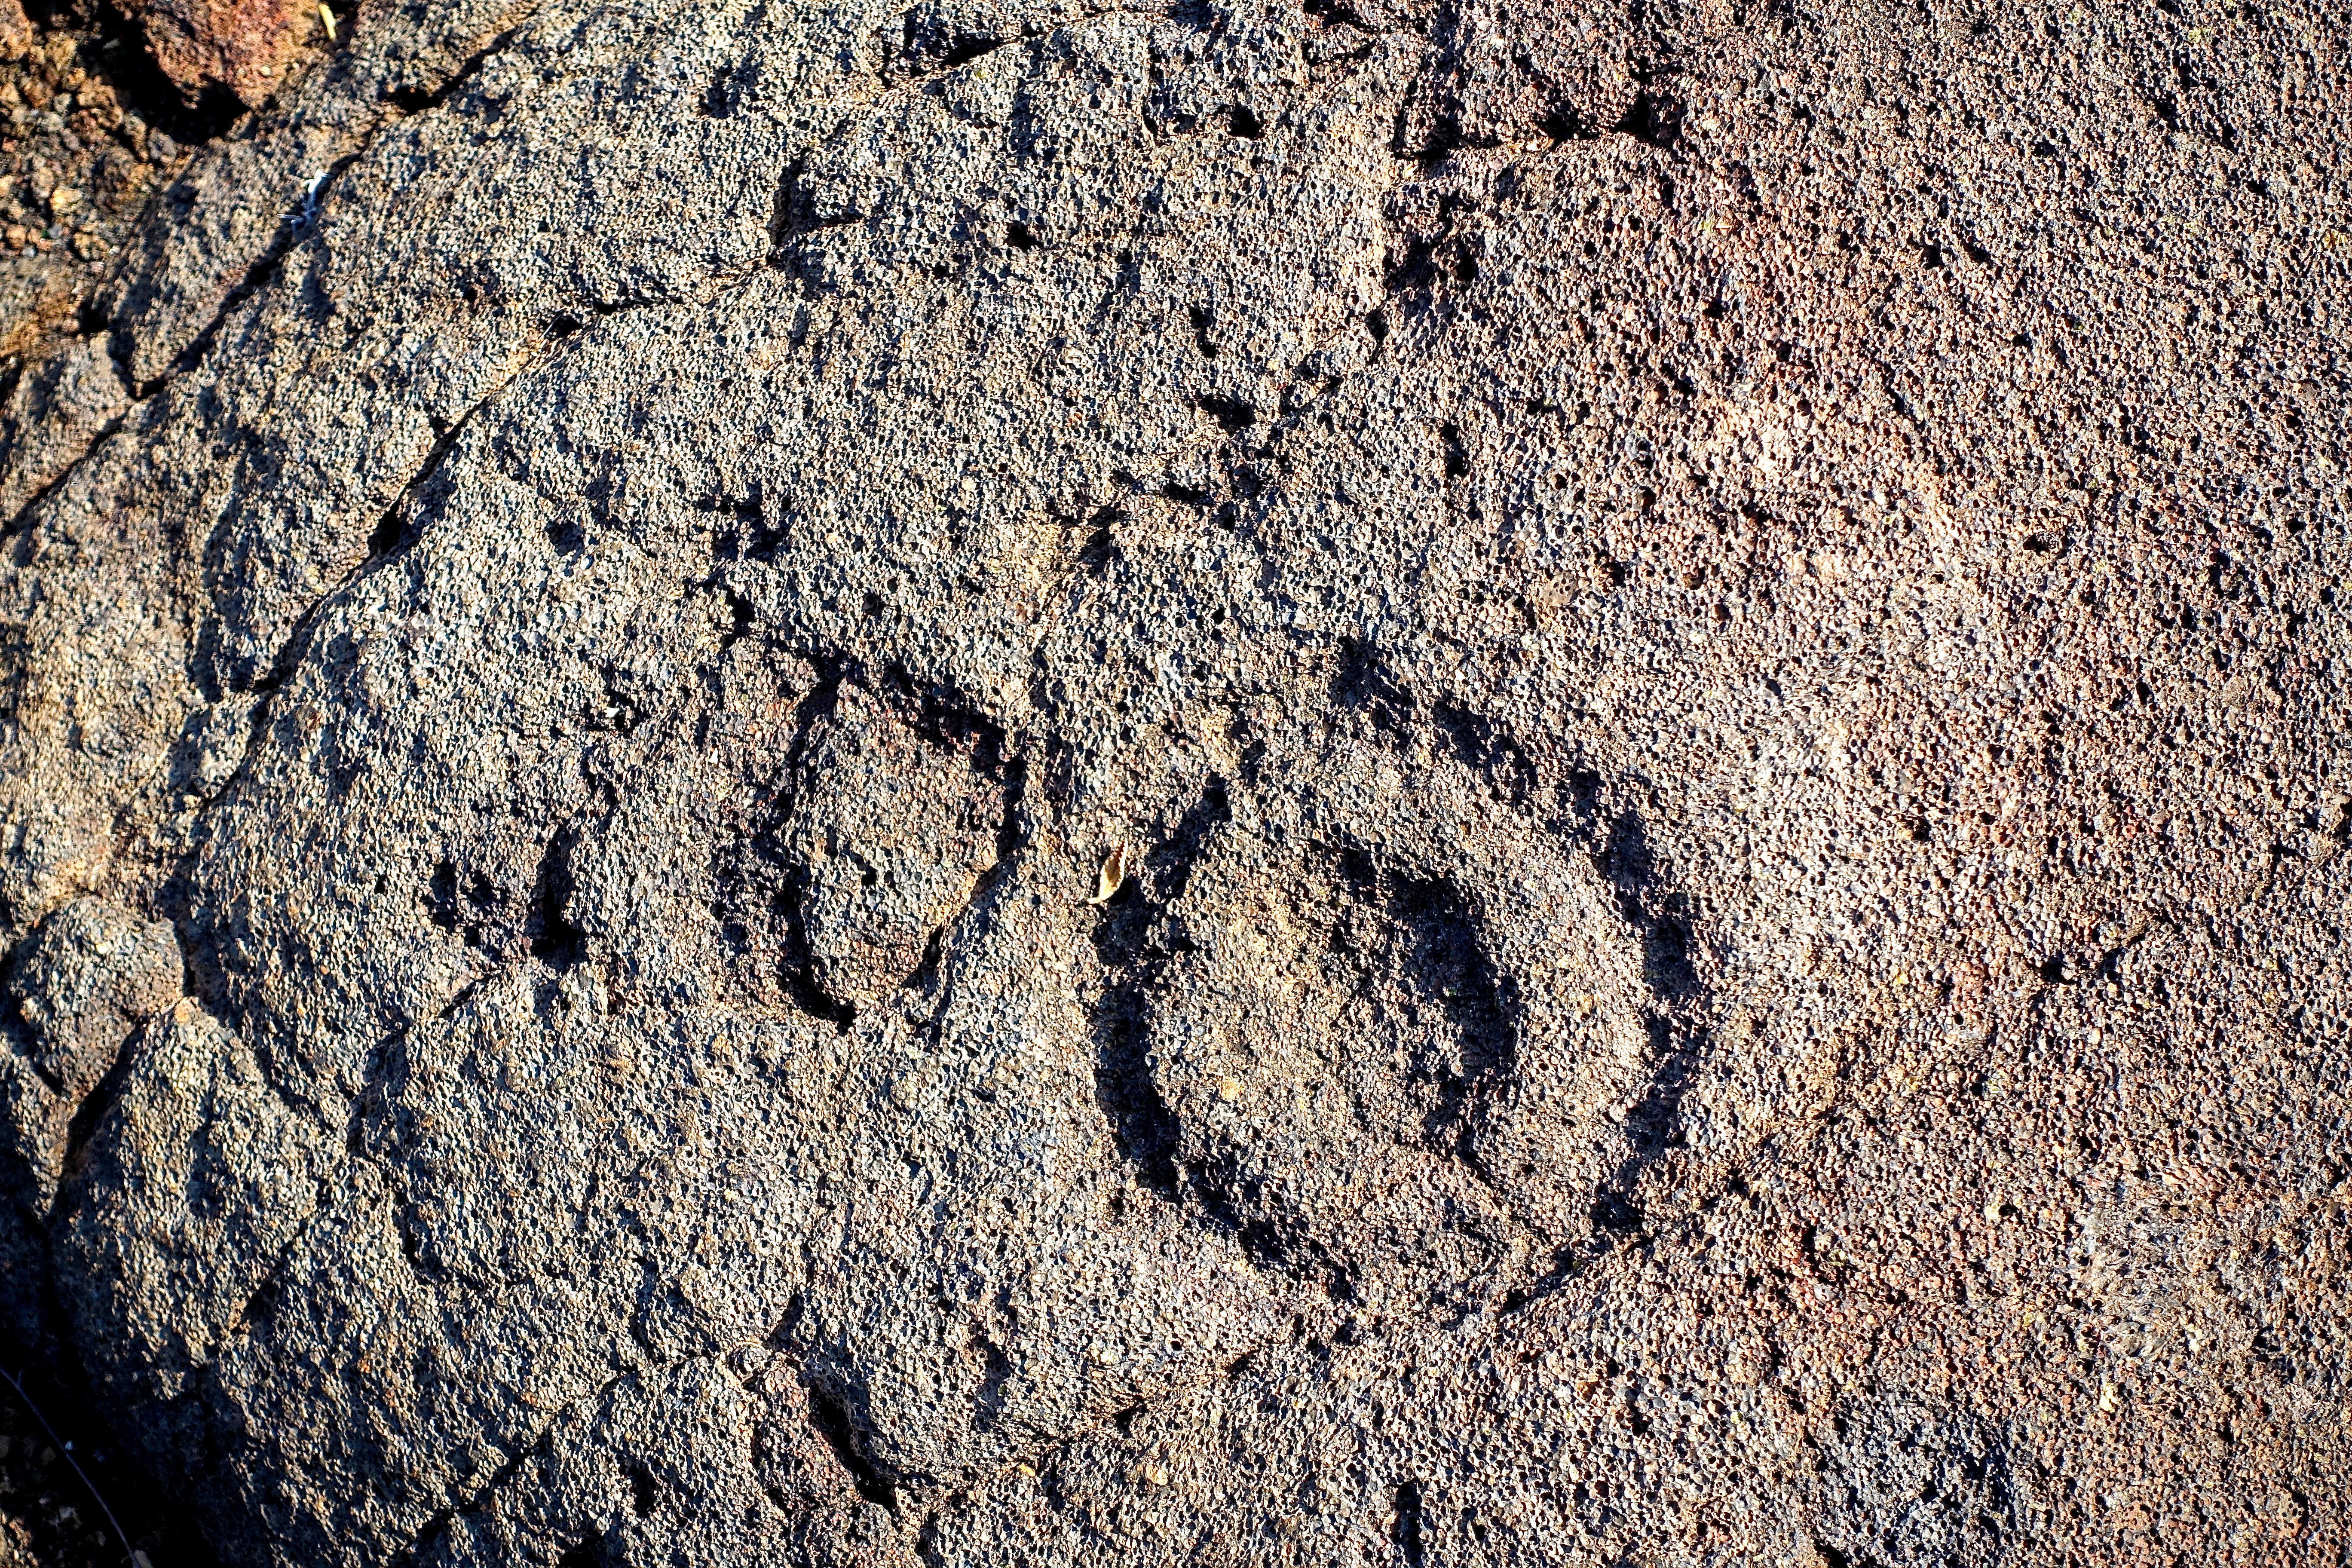 Symbols etched in stone Petroglyph field near Waikoloa | Summer Setting